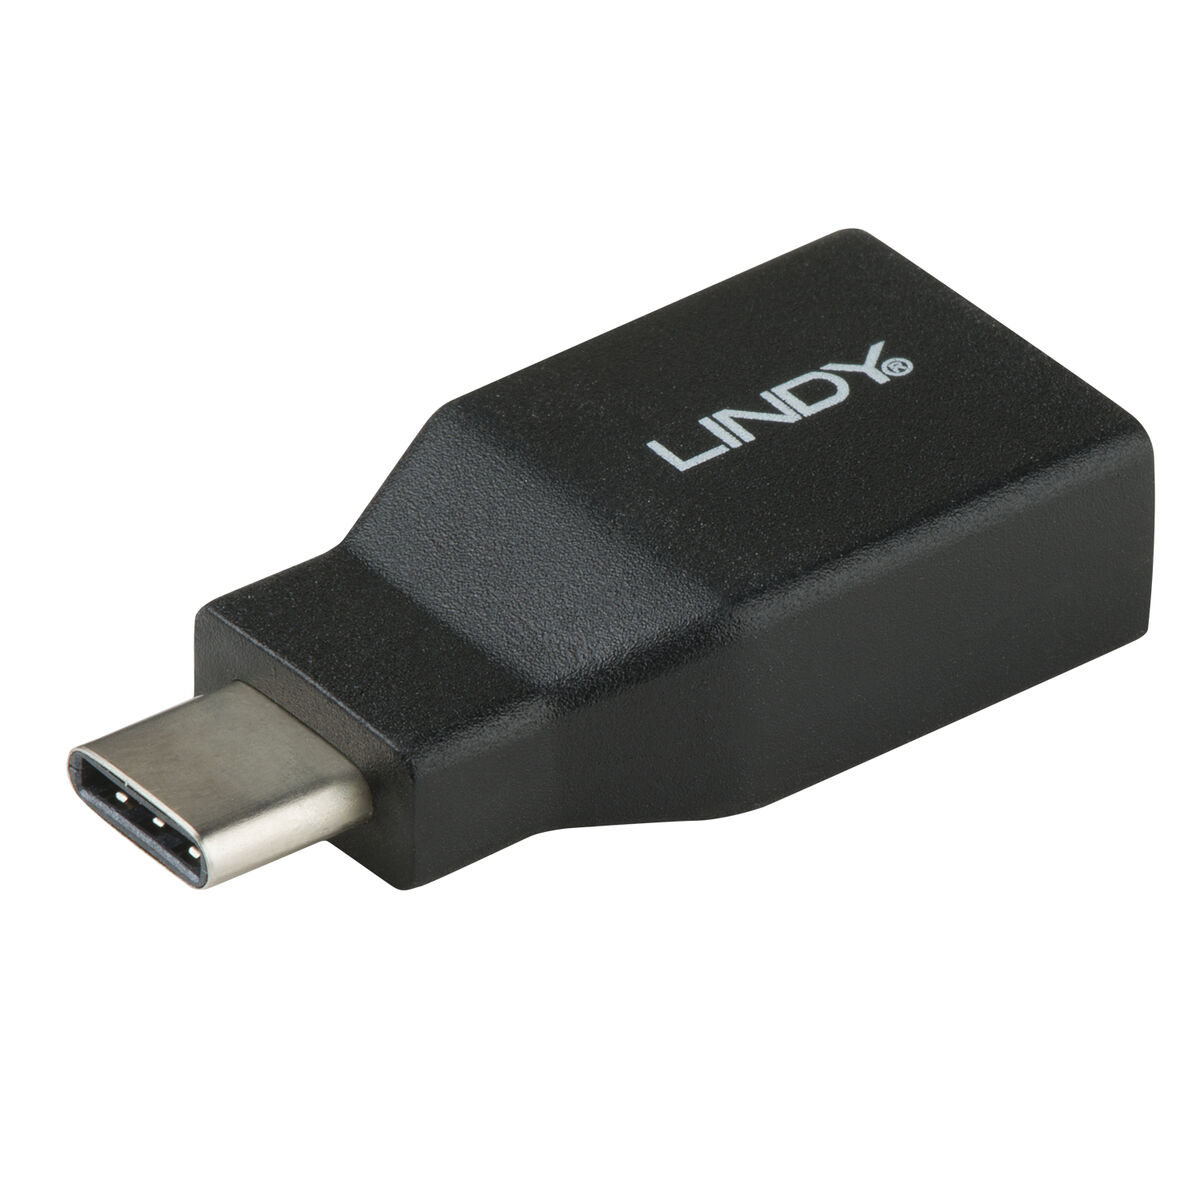 LINDY 41899 USB-Adapter, mehrfarbig USB-C-zu